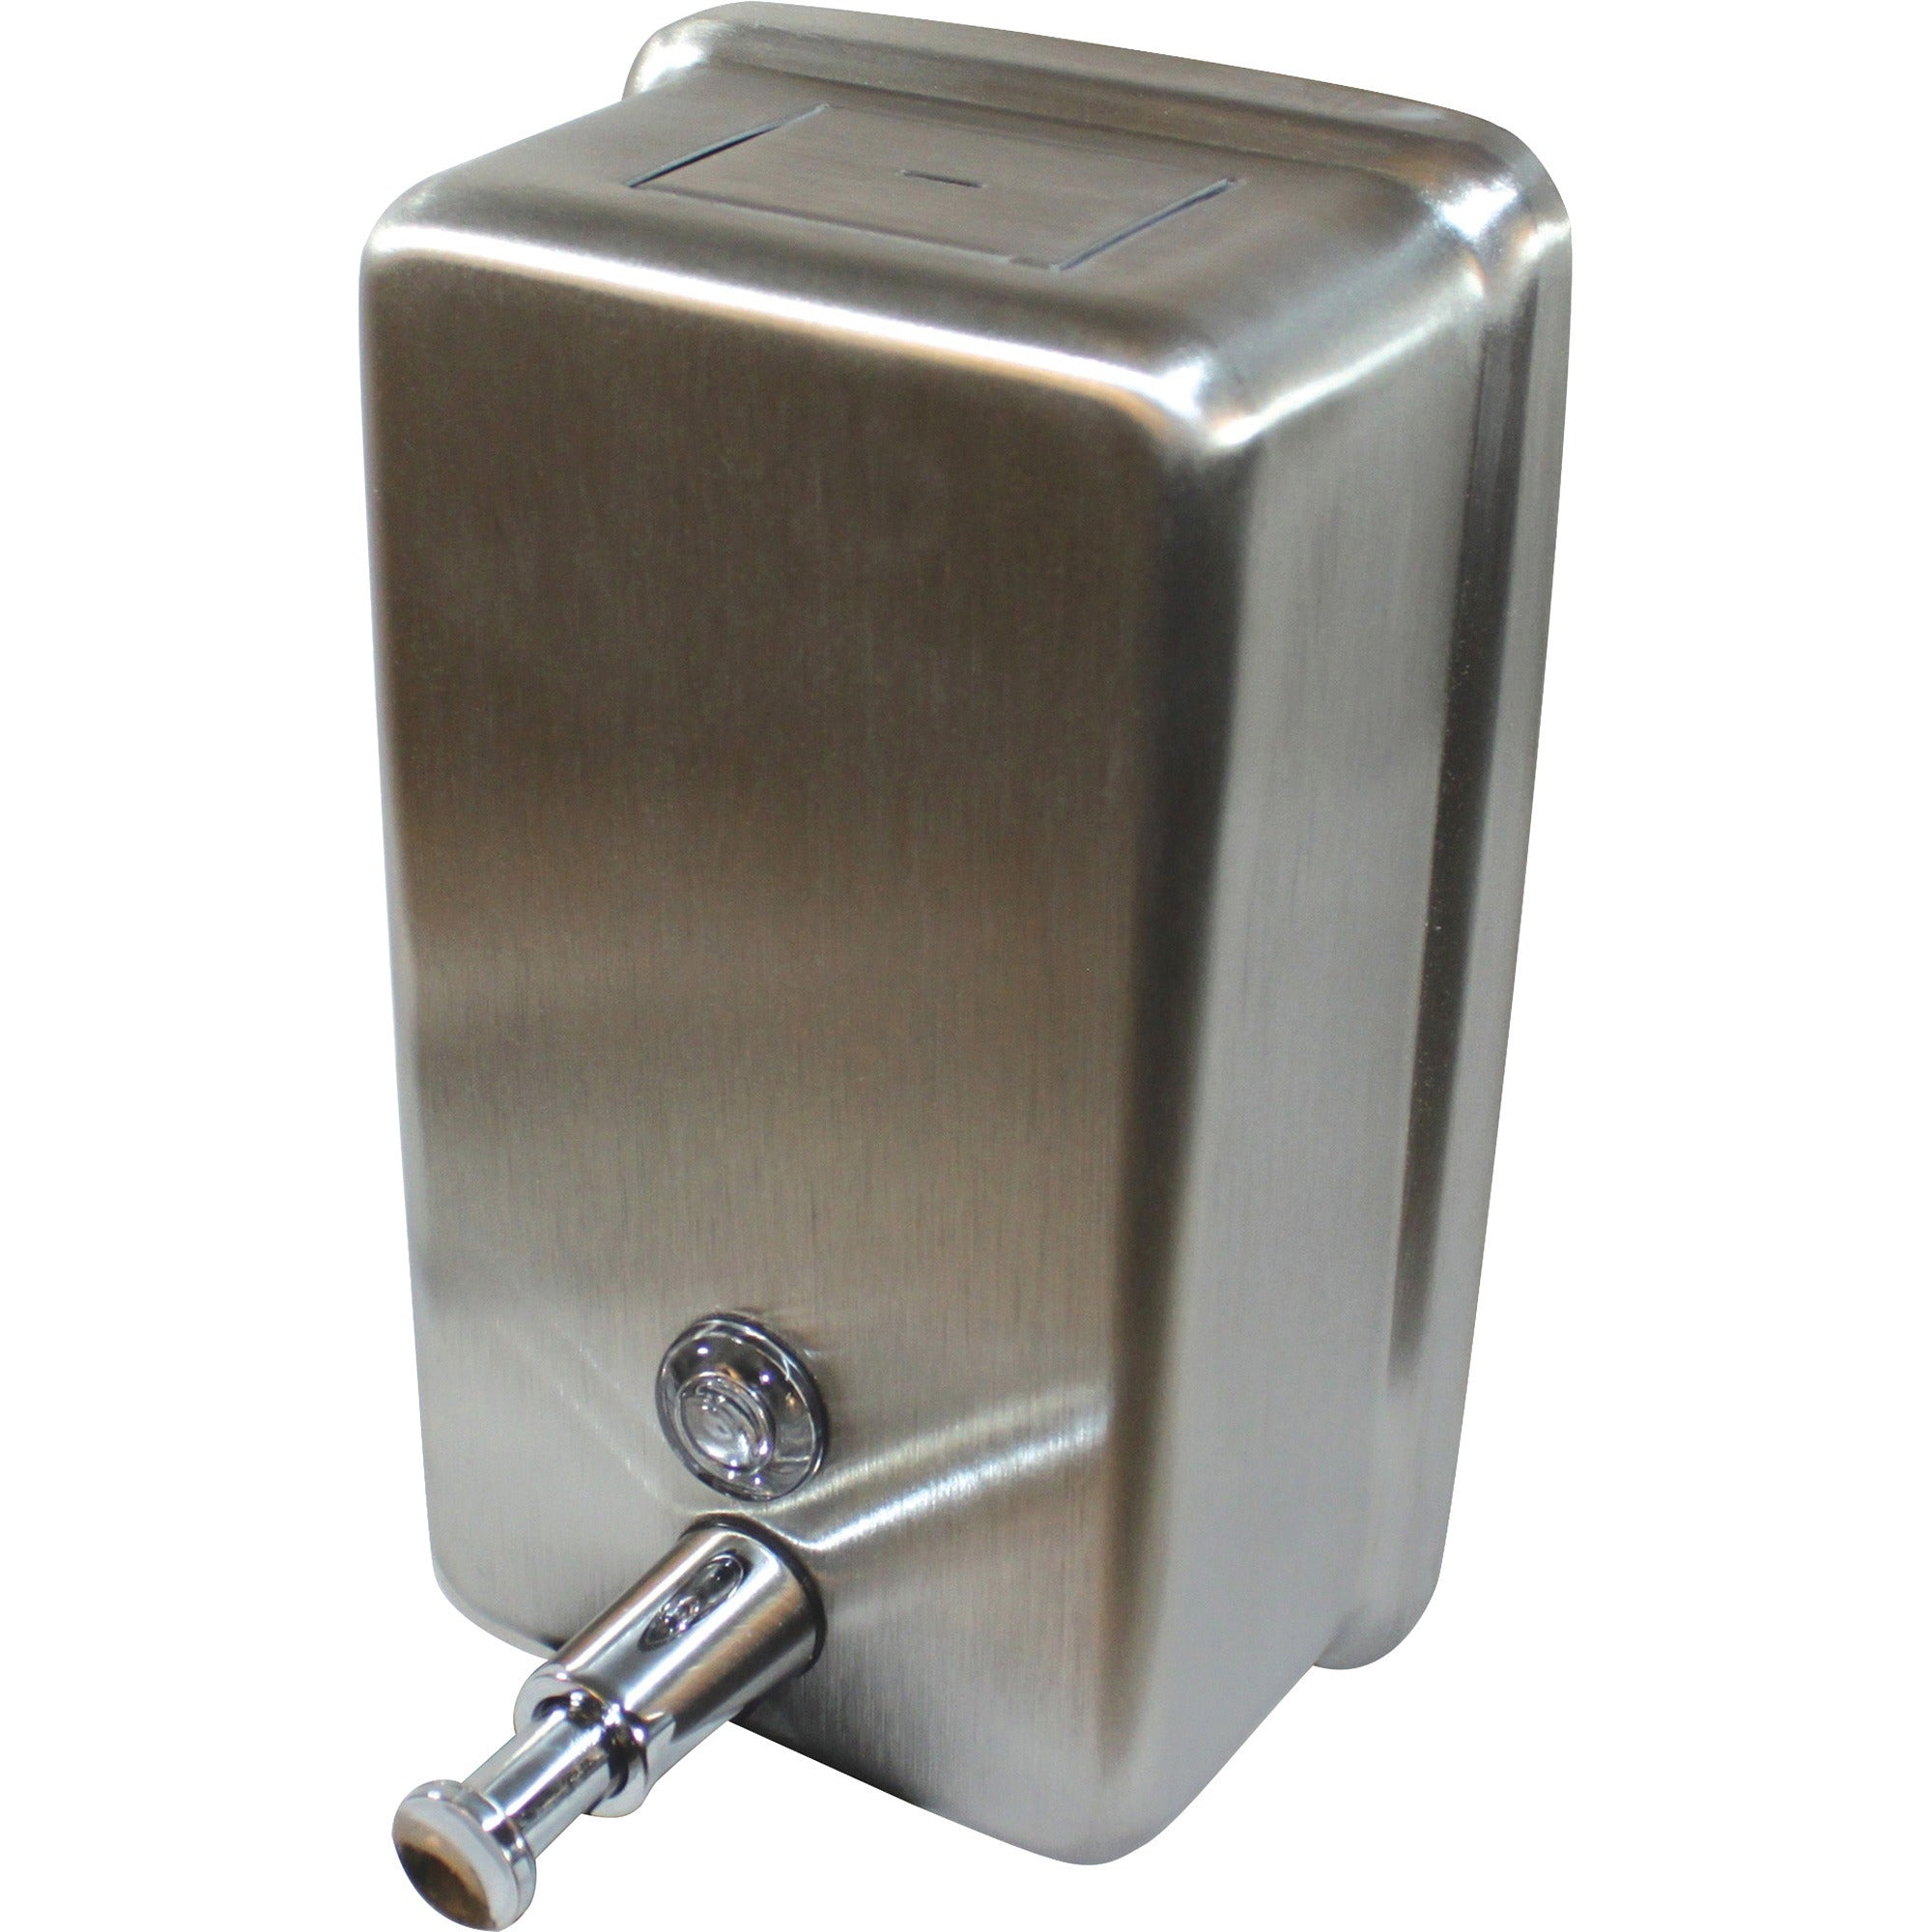 genuine-joe-stainless-vertical-soap-dispenser-manual-125-quart-capacity-stainless-steel-24-carton_gjo85134ct - 2